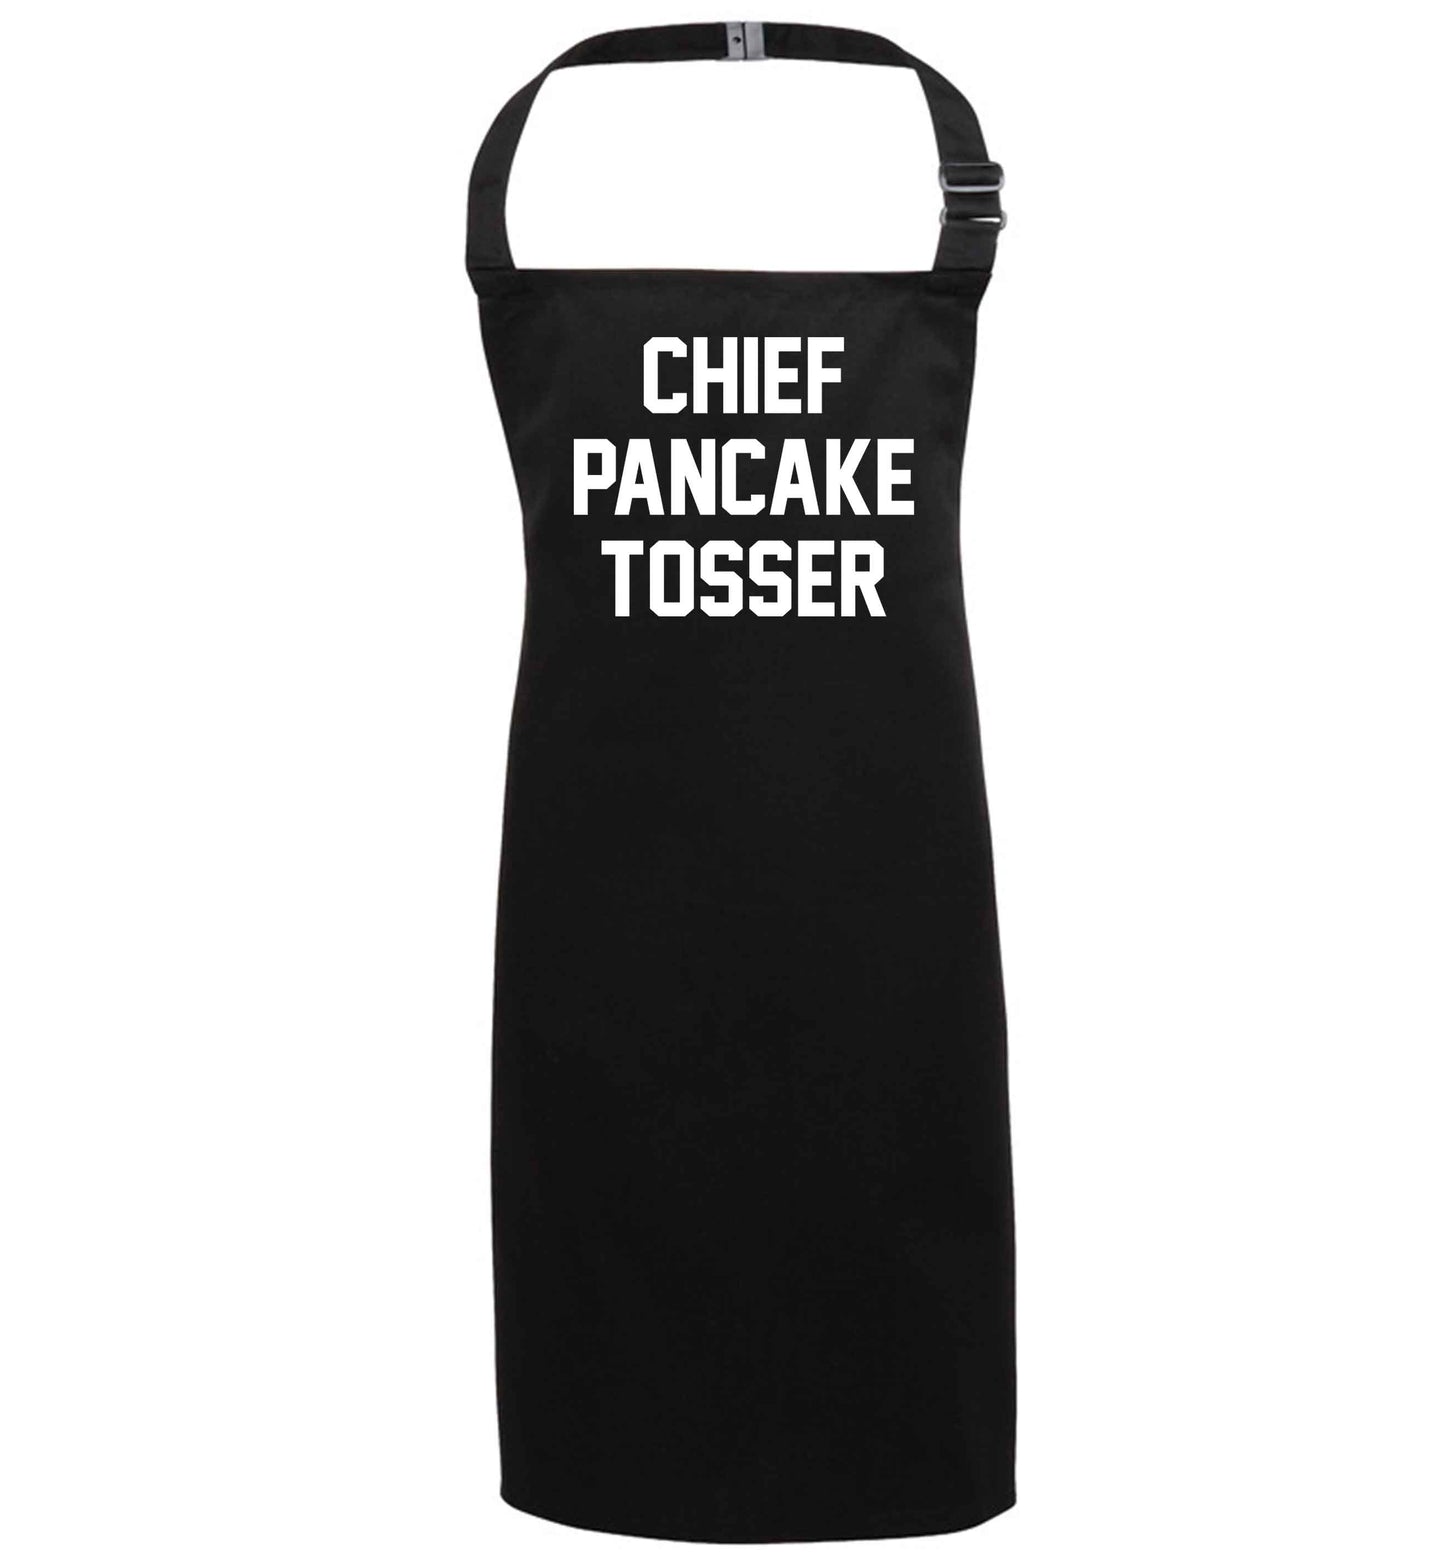 Chief pancake tosser black apron 7-10 years